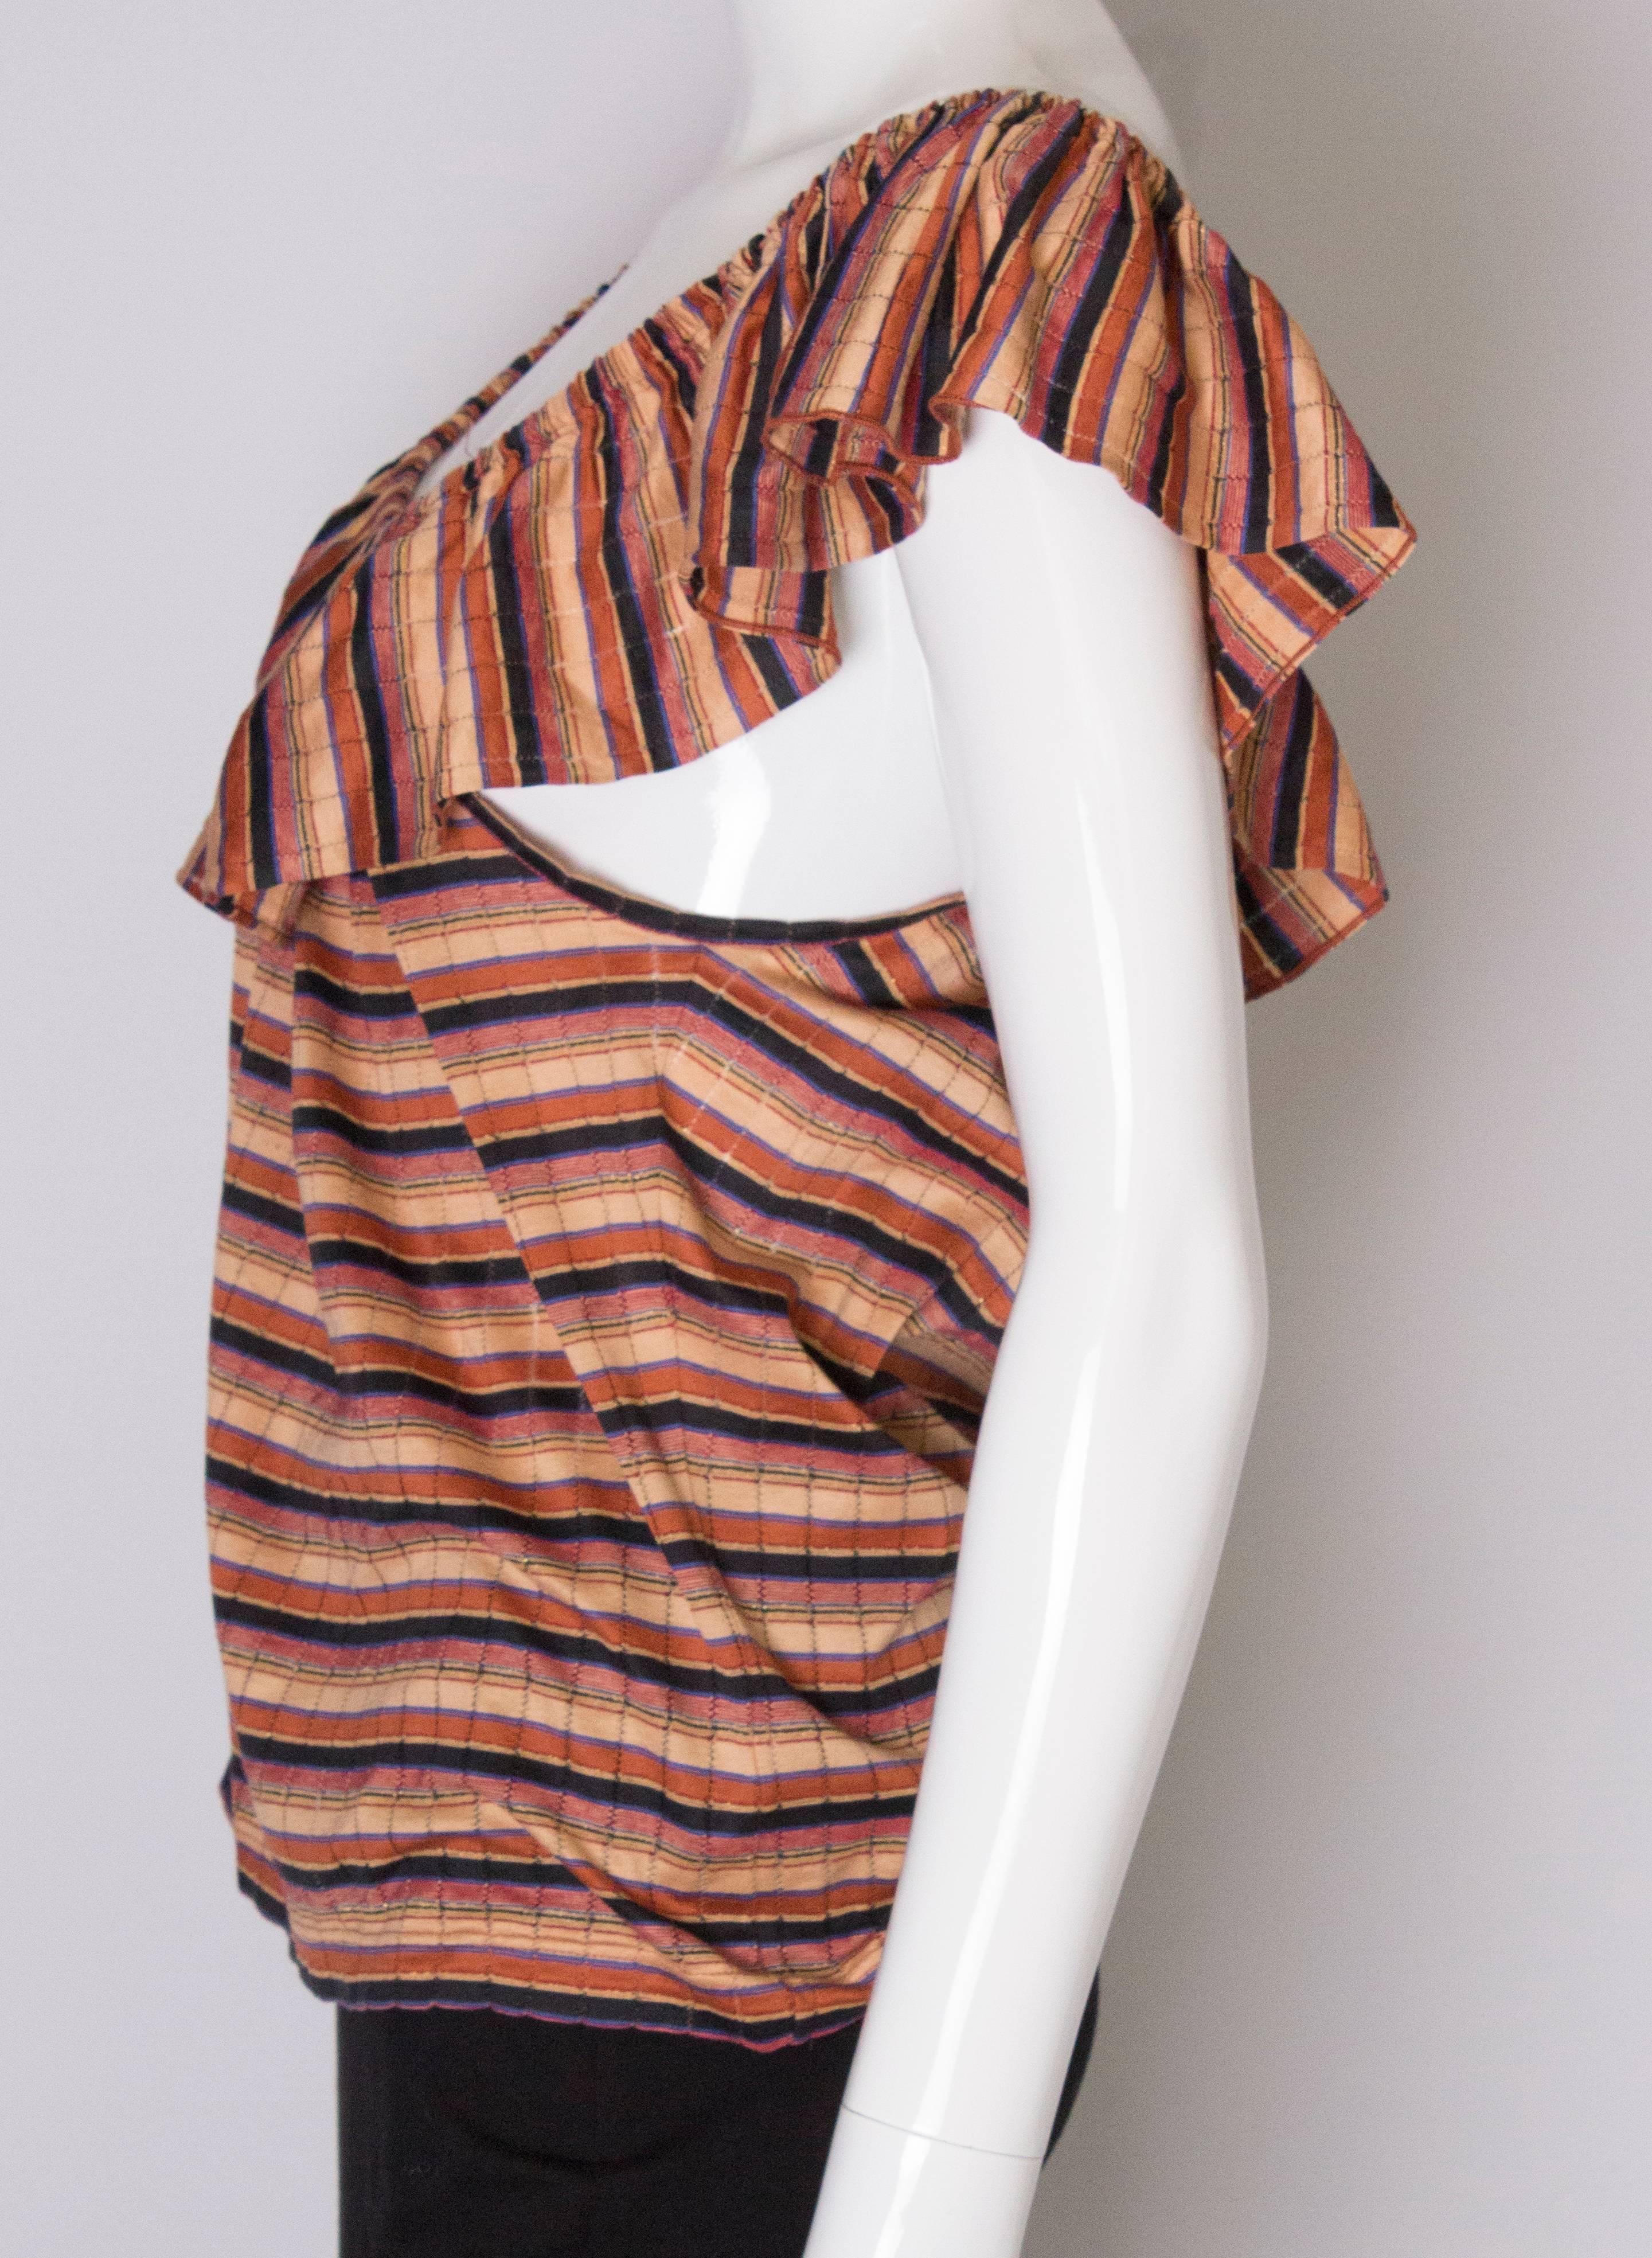  A Vintage 1970s striped off shoulder summer top by Yves Saint Laurent  1